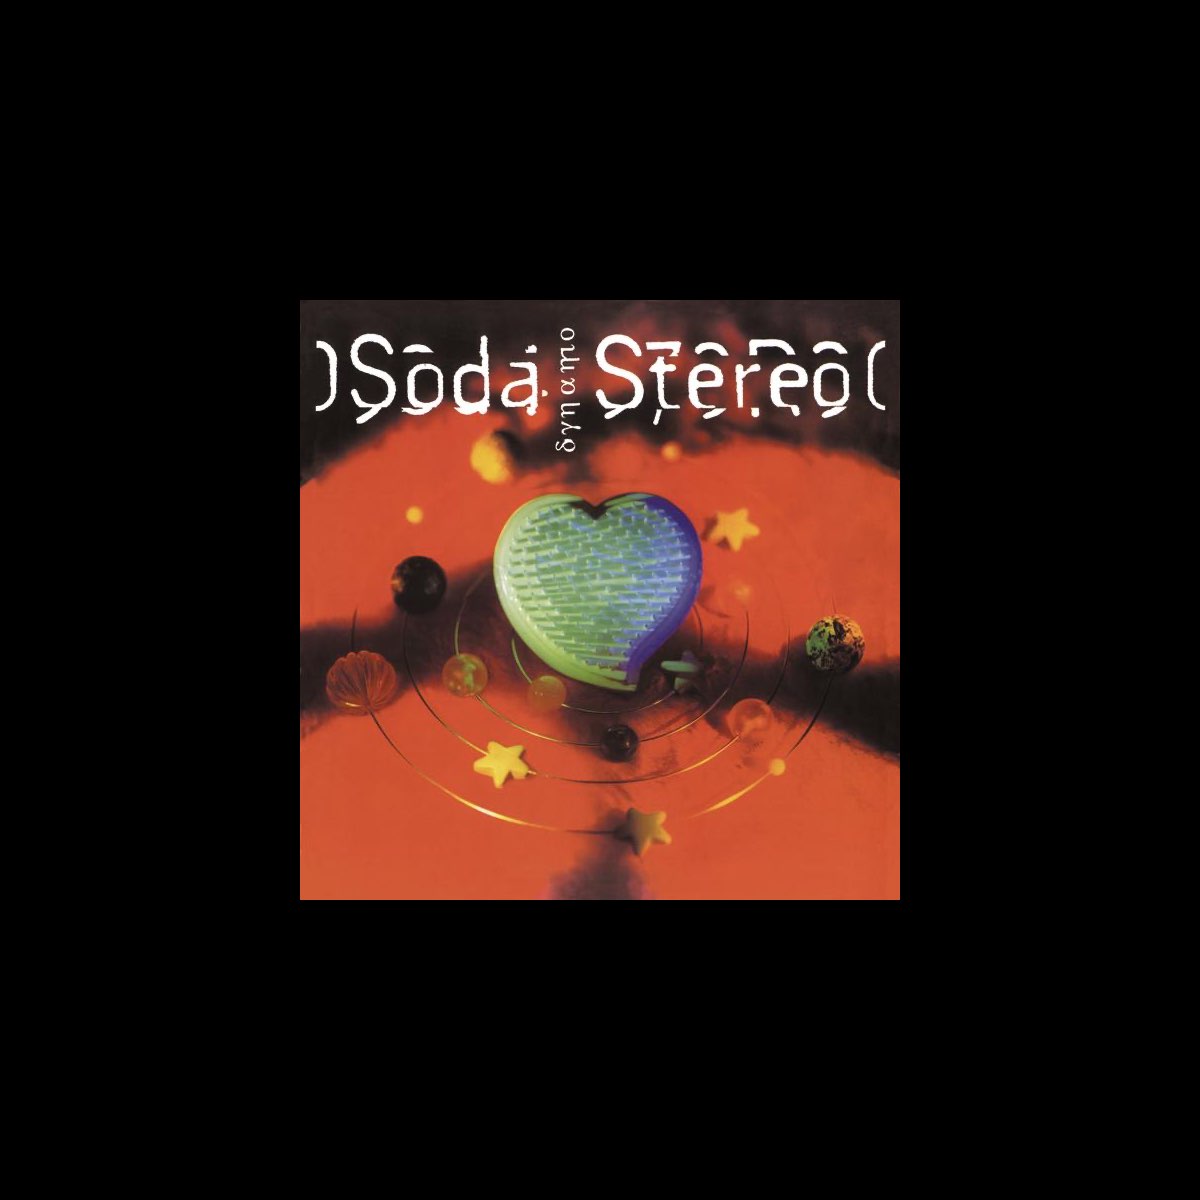 Dynamo - Album by Soda Stereo - Apple Music